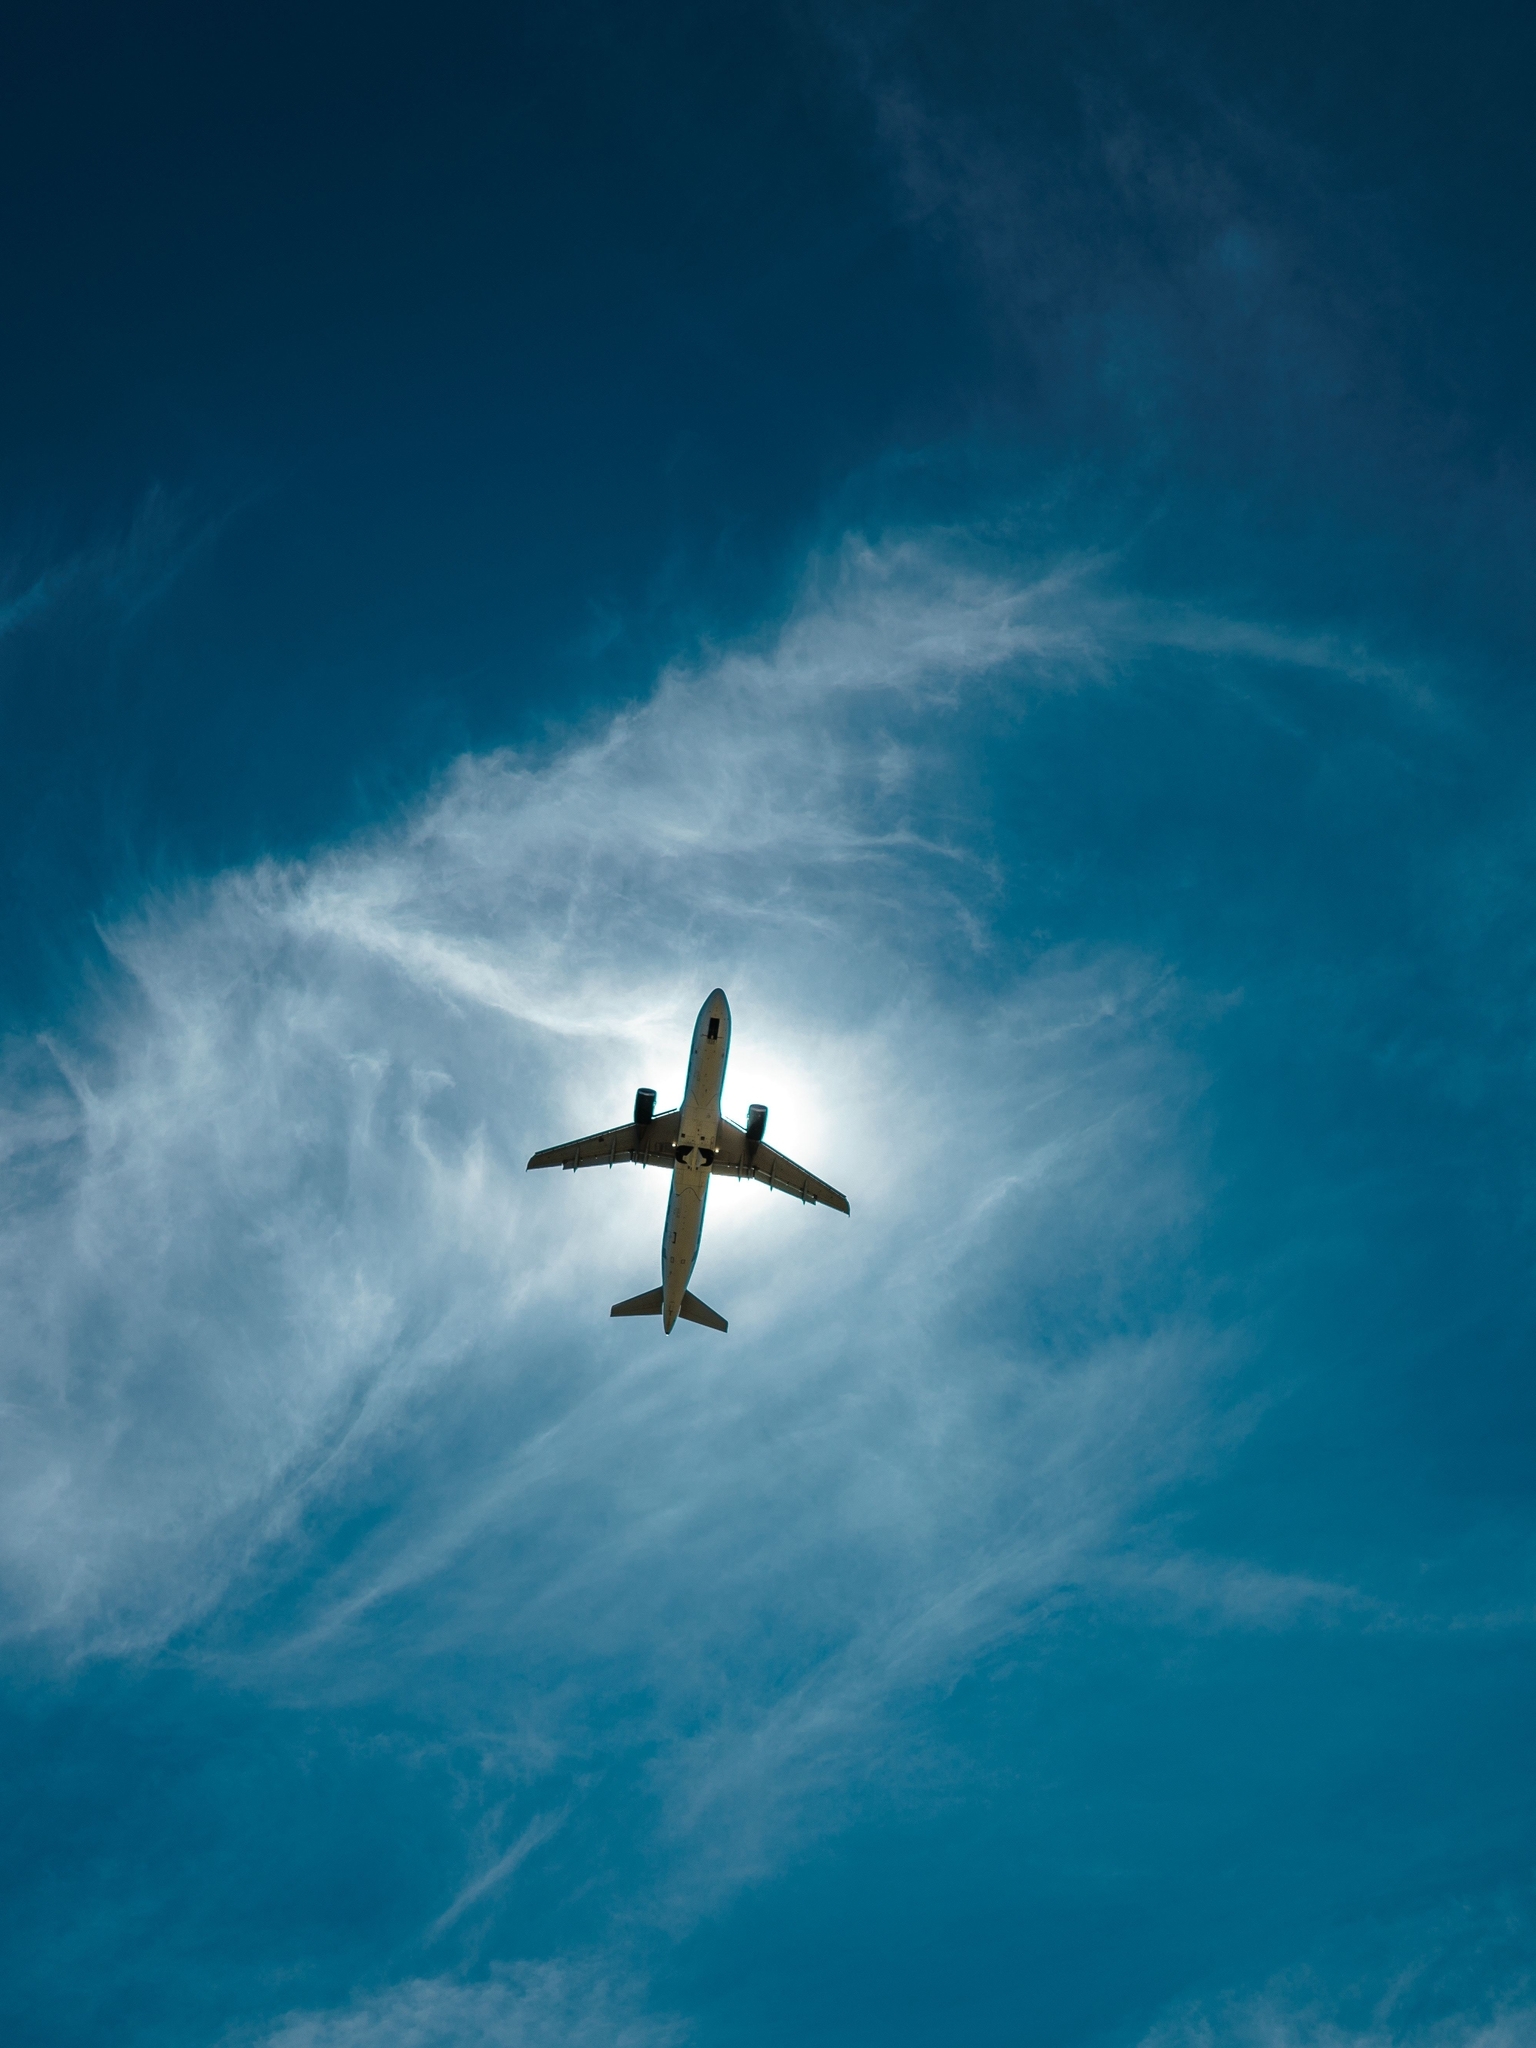 Картинка: Самолёт, полёт, летит, высоко, облака, небо